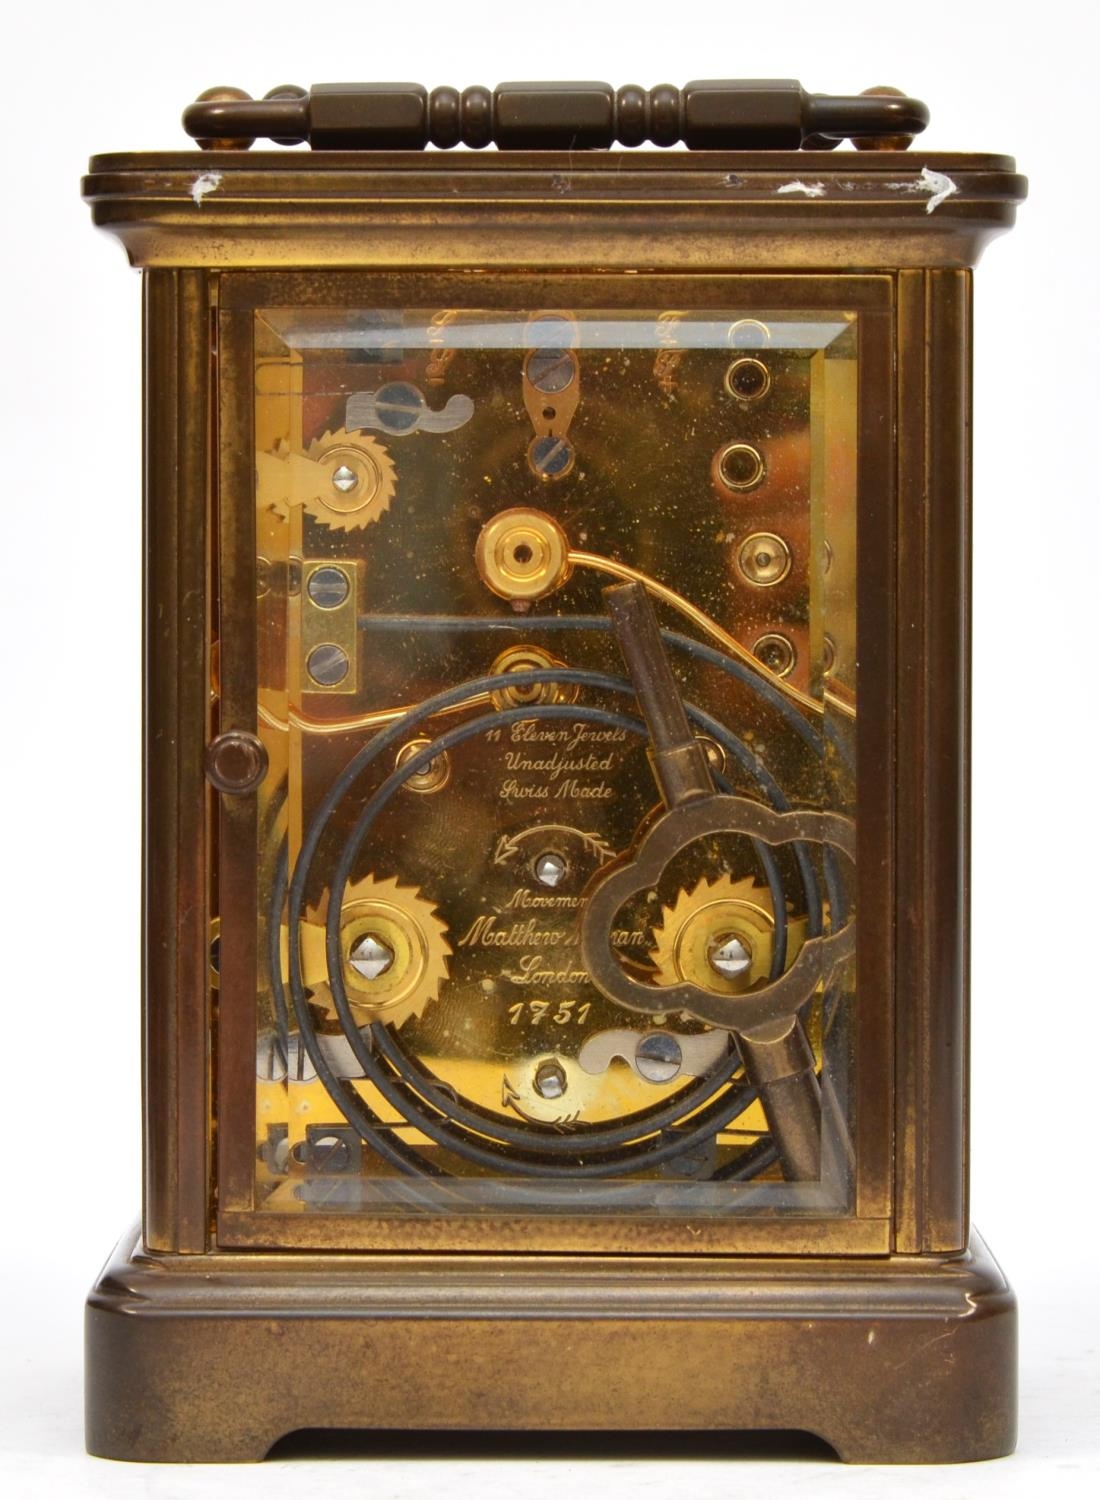 Matthew Norman 1751, London, a Grand Corniche brass alarm/striking/repeating carriage clock, model - Image 4 of 6